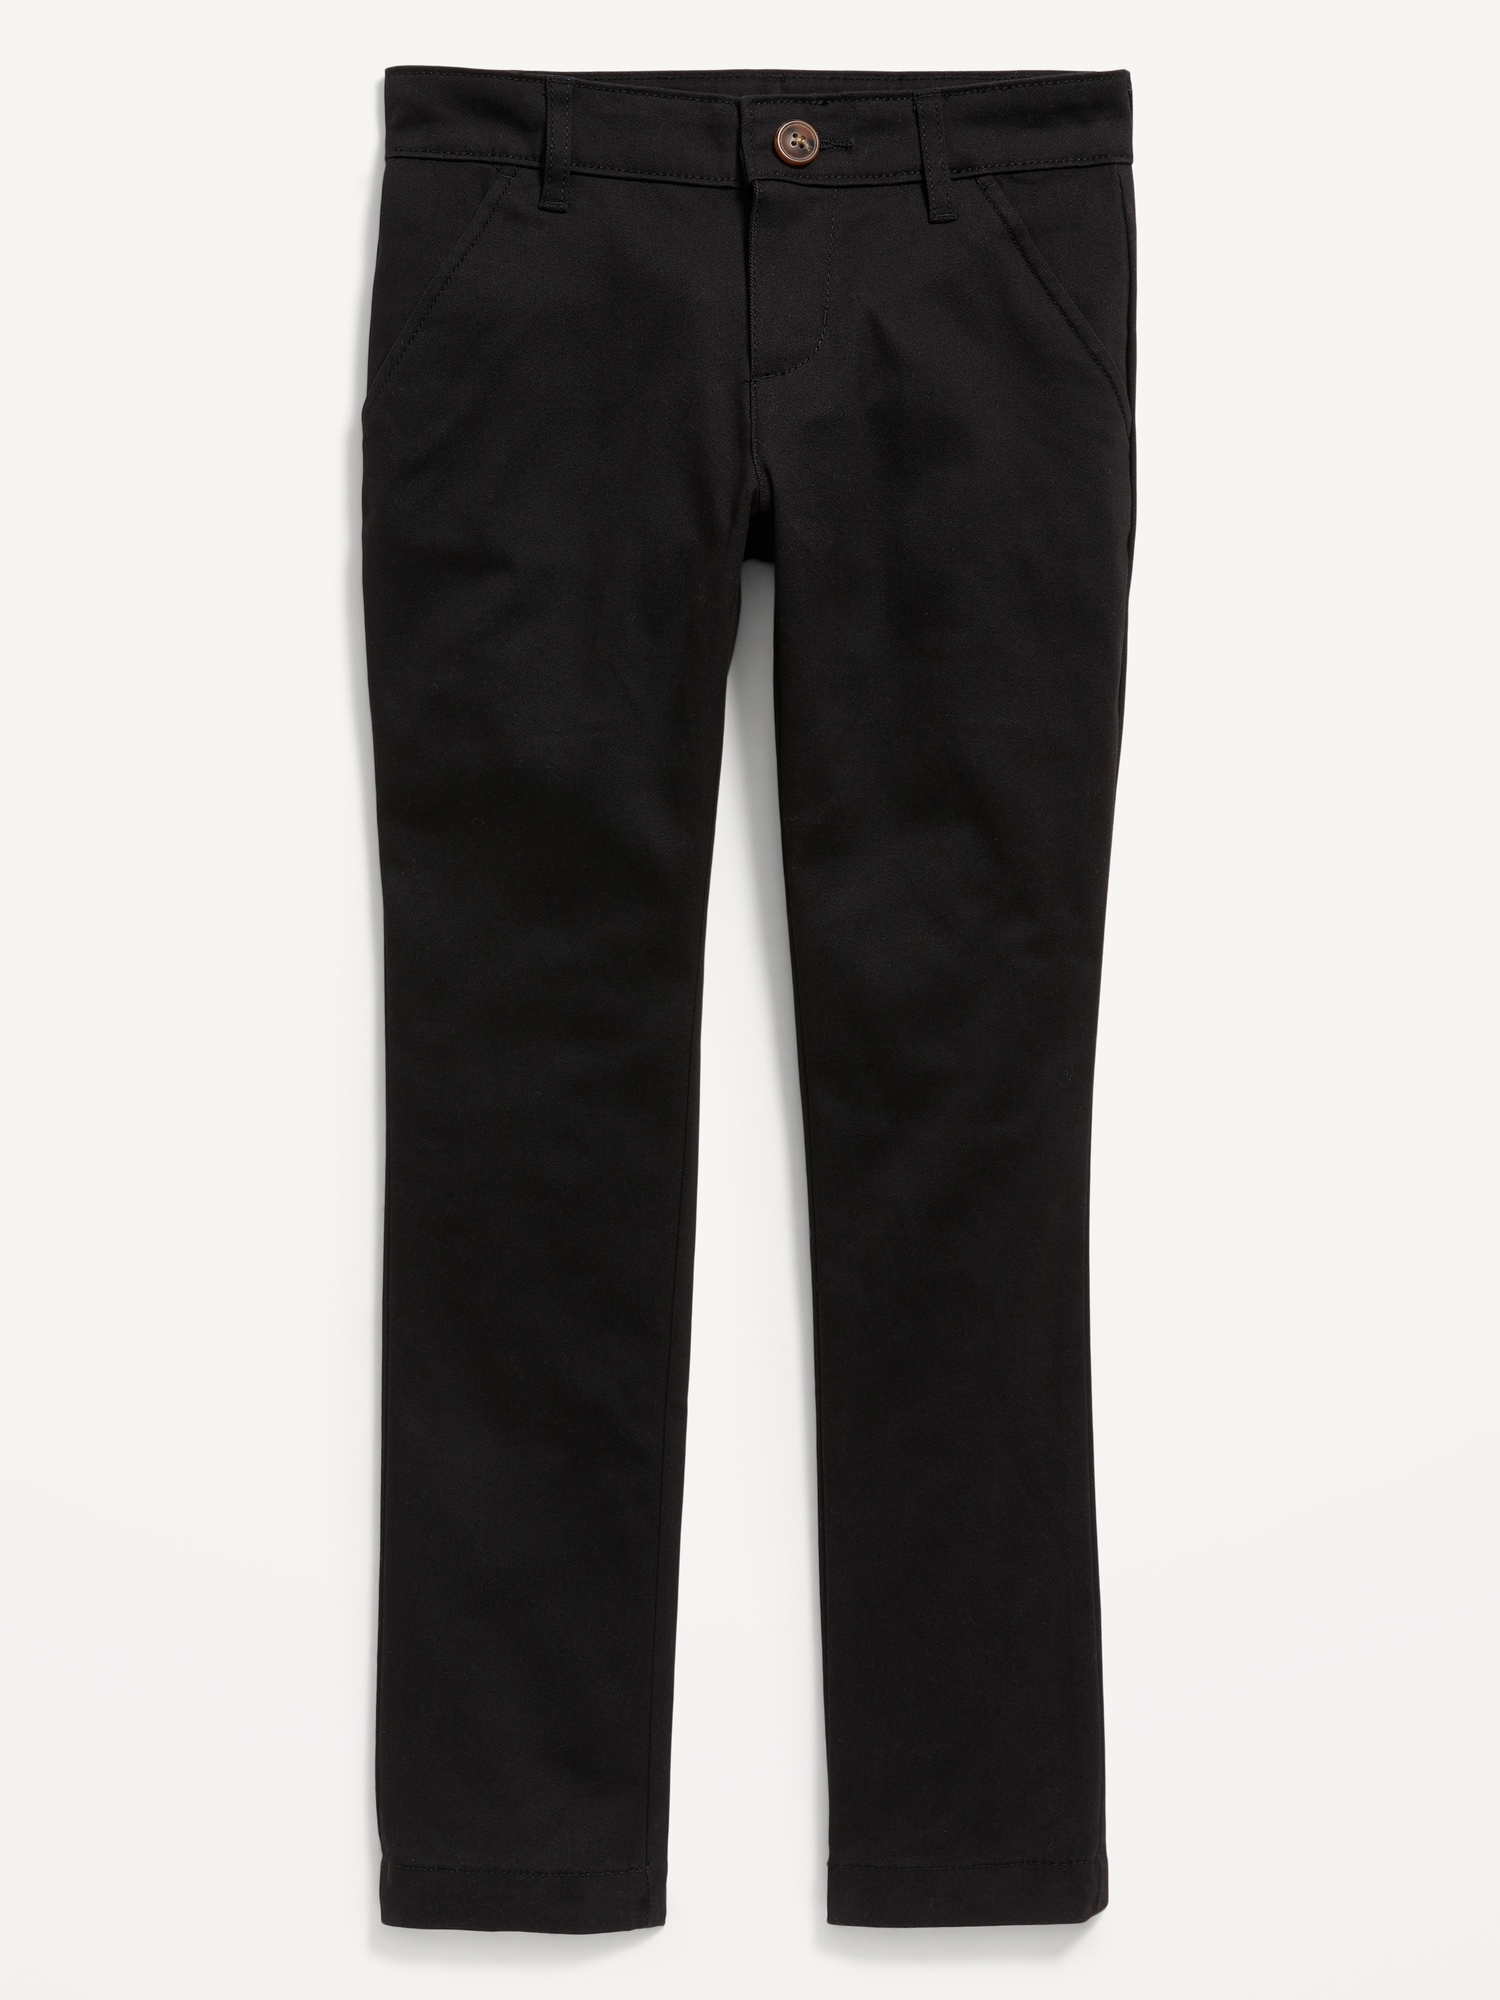 NWT Cat & Jack Girls Size 6 Straight Adjustable Waist Black School Uniform  Pants | Size girls, School uniform pants, Uniform pants